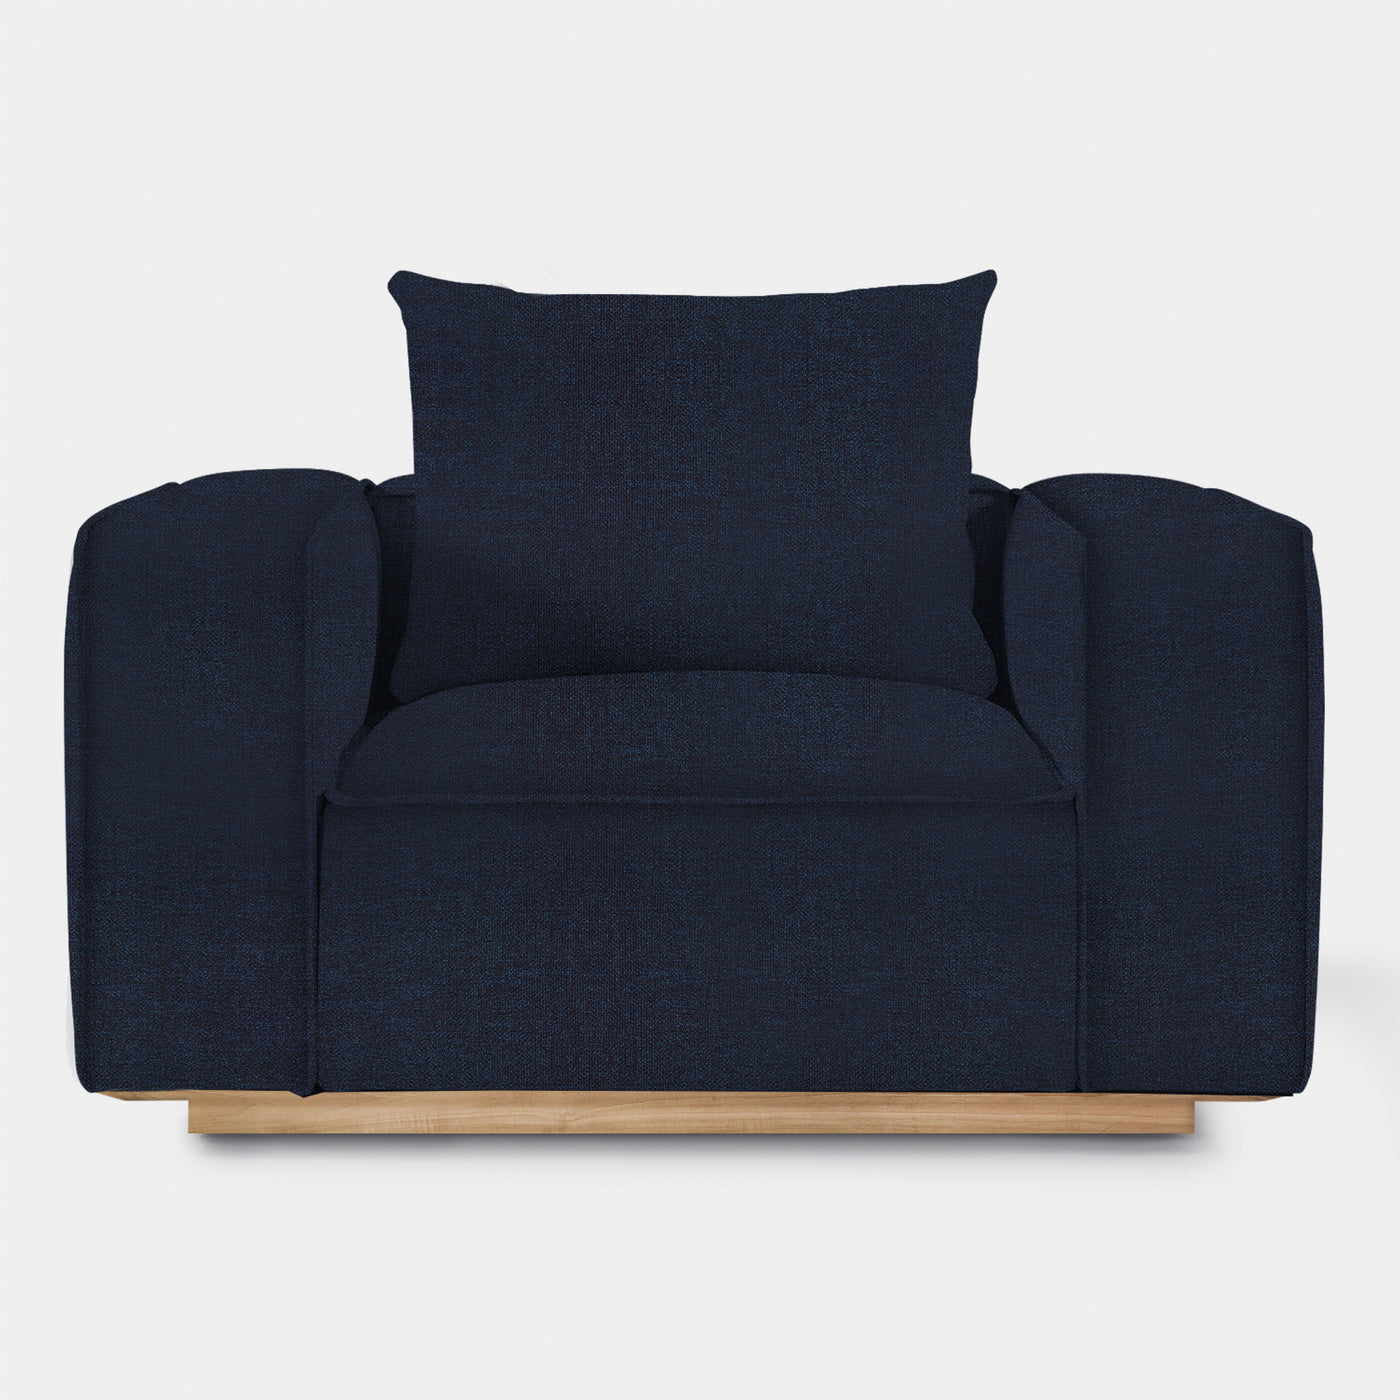 Santorini Outdoor Lounge Chair